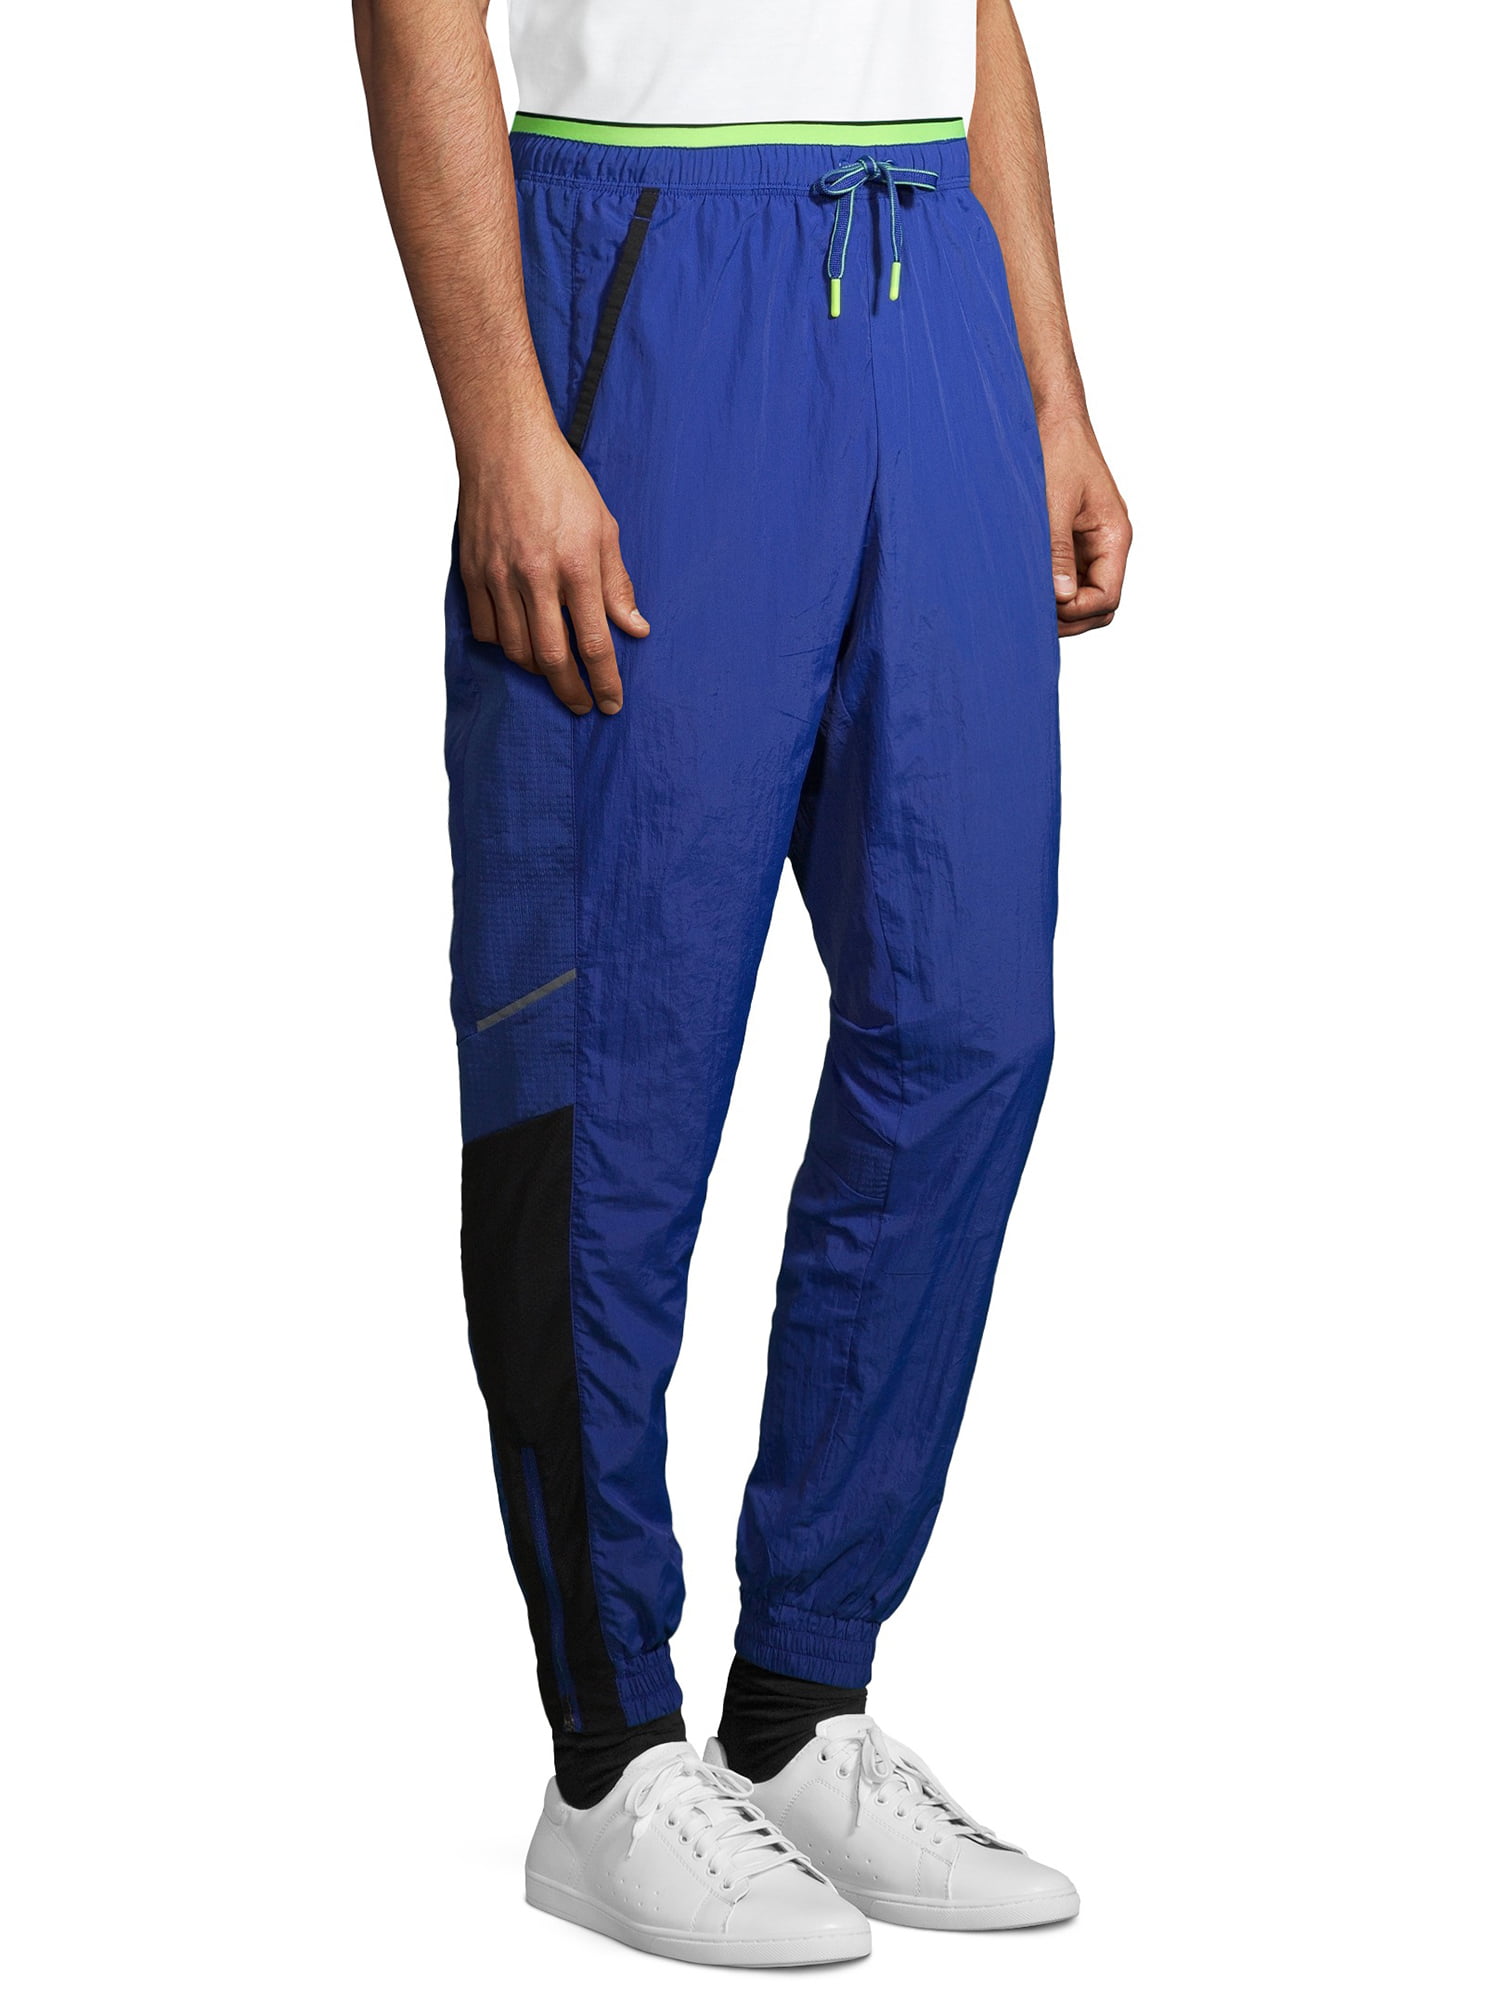 freakz Solid Men Blue Track Pants  Buy freakz Solid Men Blue Track Pants  Online at Best Prices in India  Flipkartcom